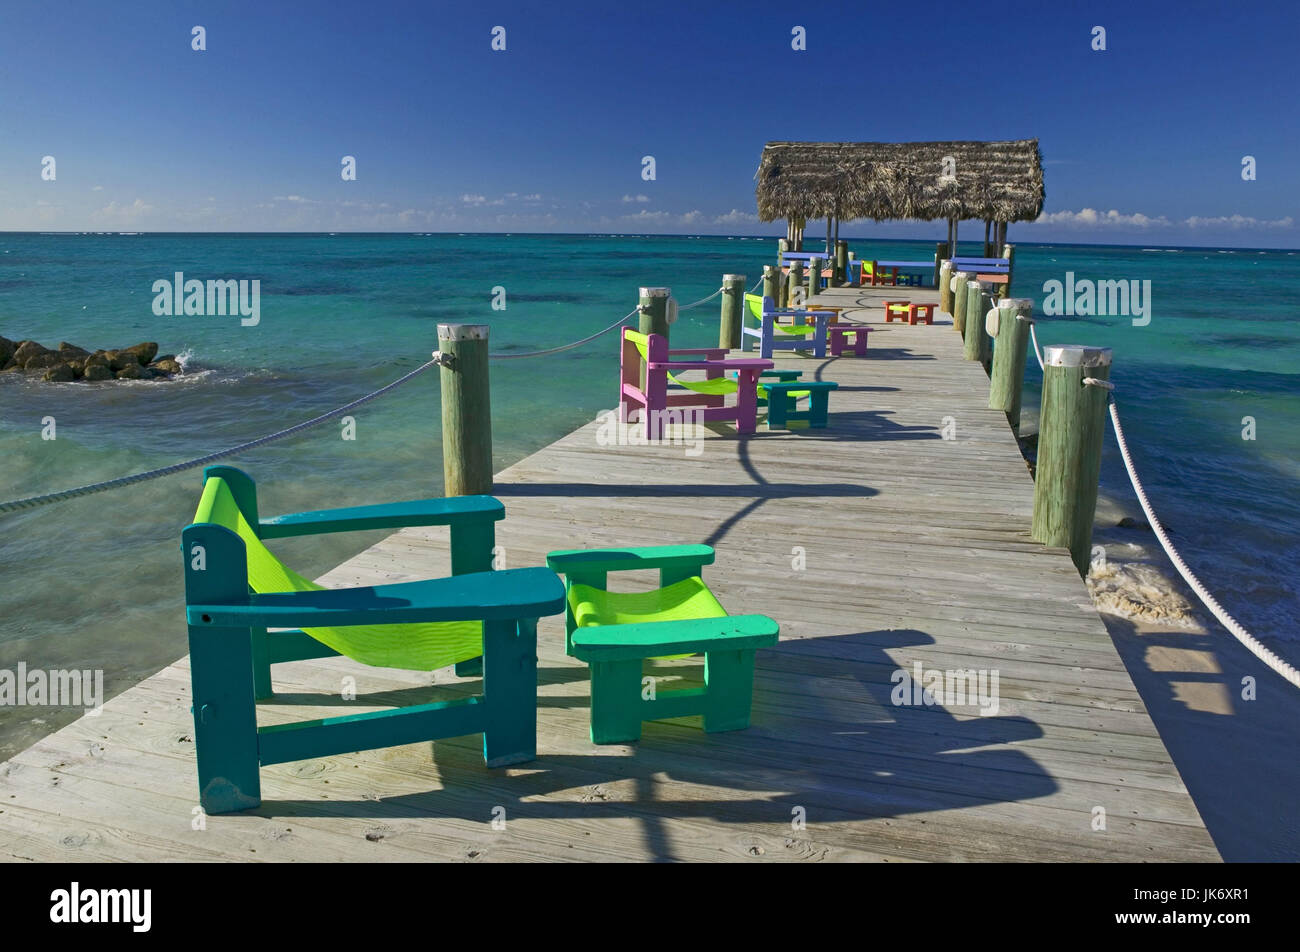 Bahamas, Ozean, Steg, Stühle, bunt Foto Stock